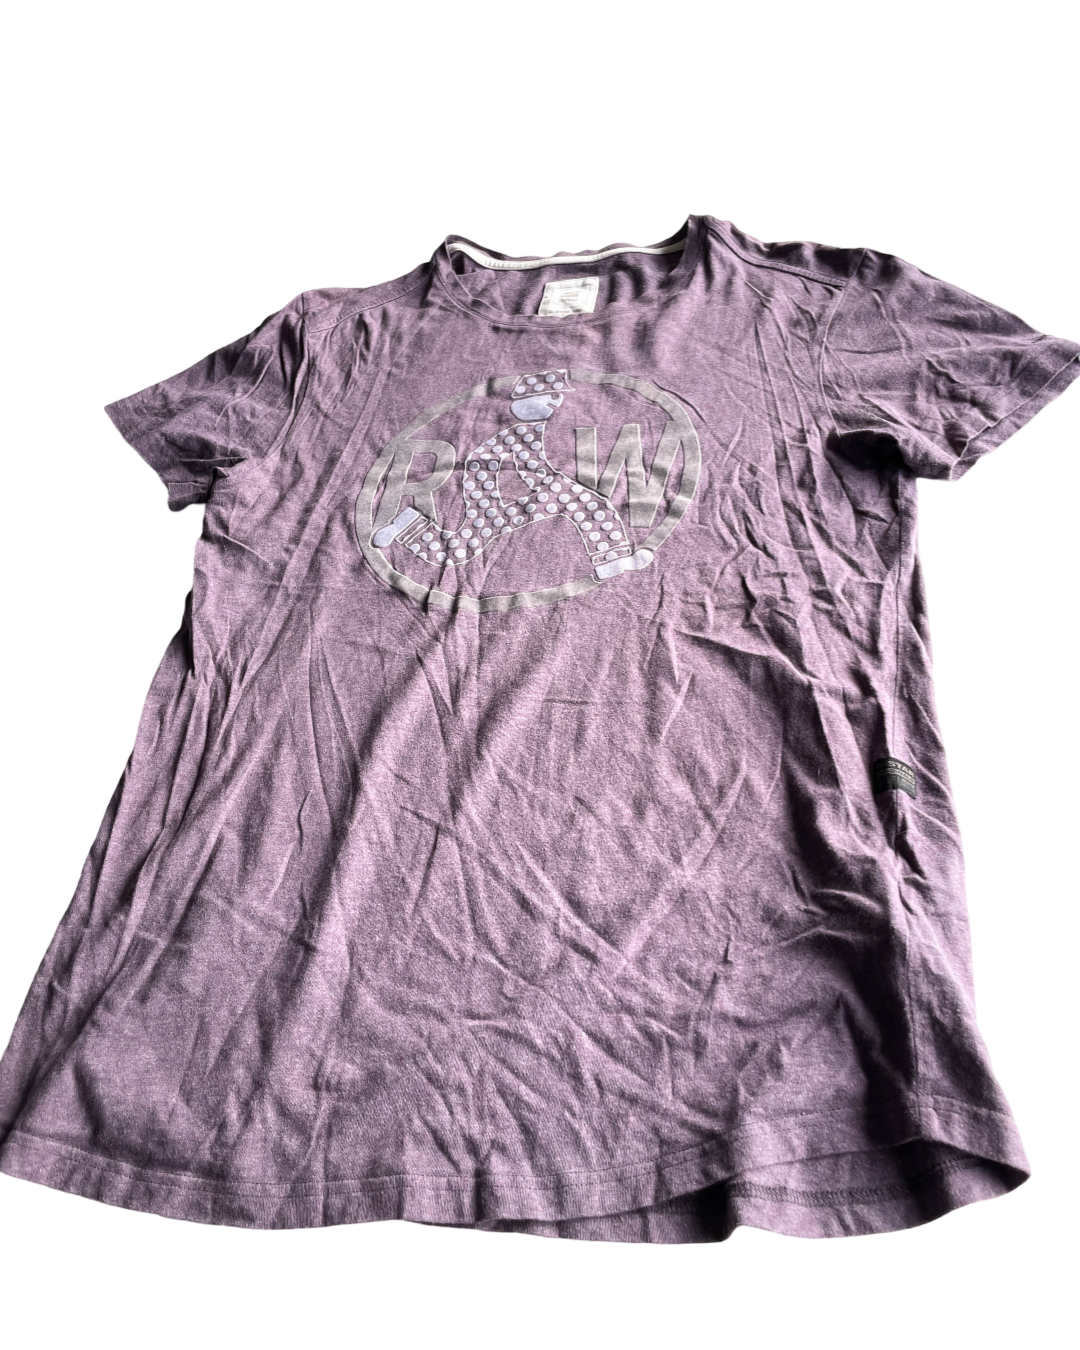 vintage g star purple t shirt in size in L  L 30 W 21|SKU 5080